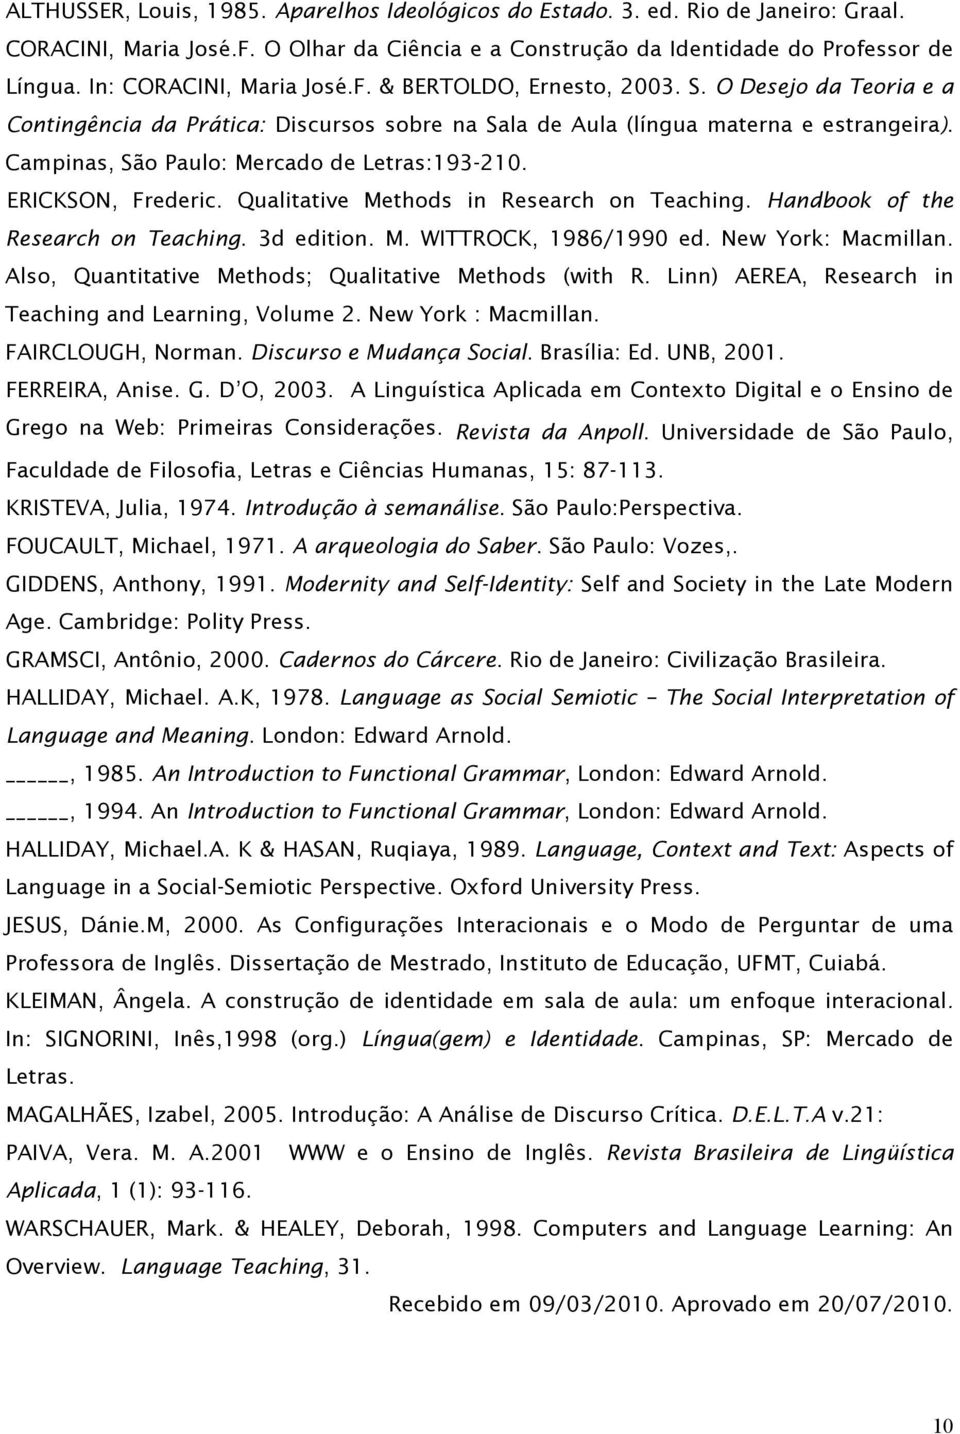 Campinas, São Paulo: Mercado de Letras:193-210. ERICKSON, Frederic. Qualitative Methods in Research on Teaching. Handbook of the Research on Teaching. 3d edition. M. WITTROCK, 1986/1990 ed.